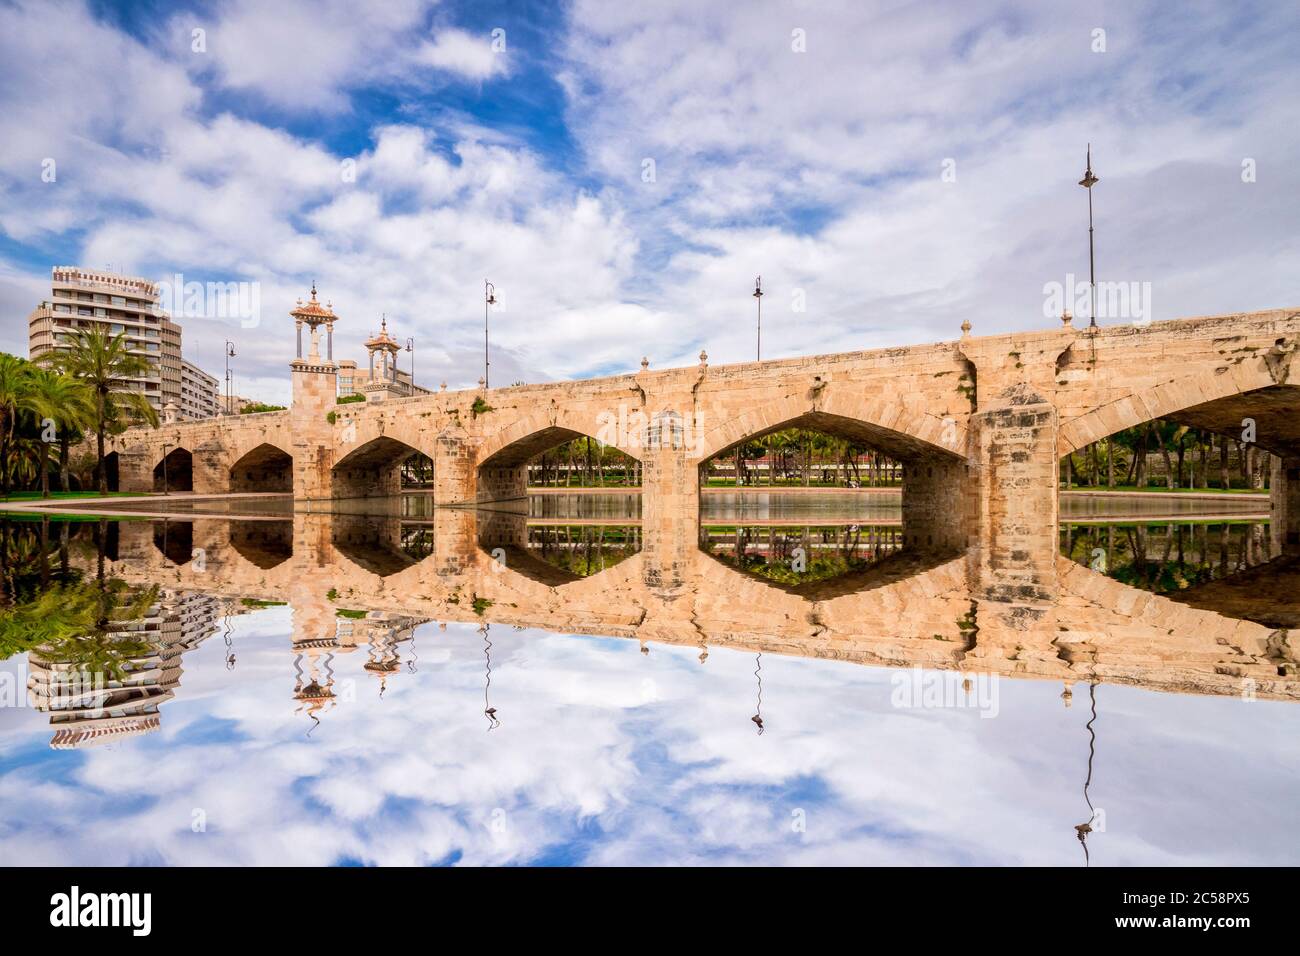 3 March 2020: Valencia, Spain - Puente del Mar, a historic bridge over the former course of the Turia River, now a public park. Stock Photo